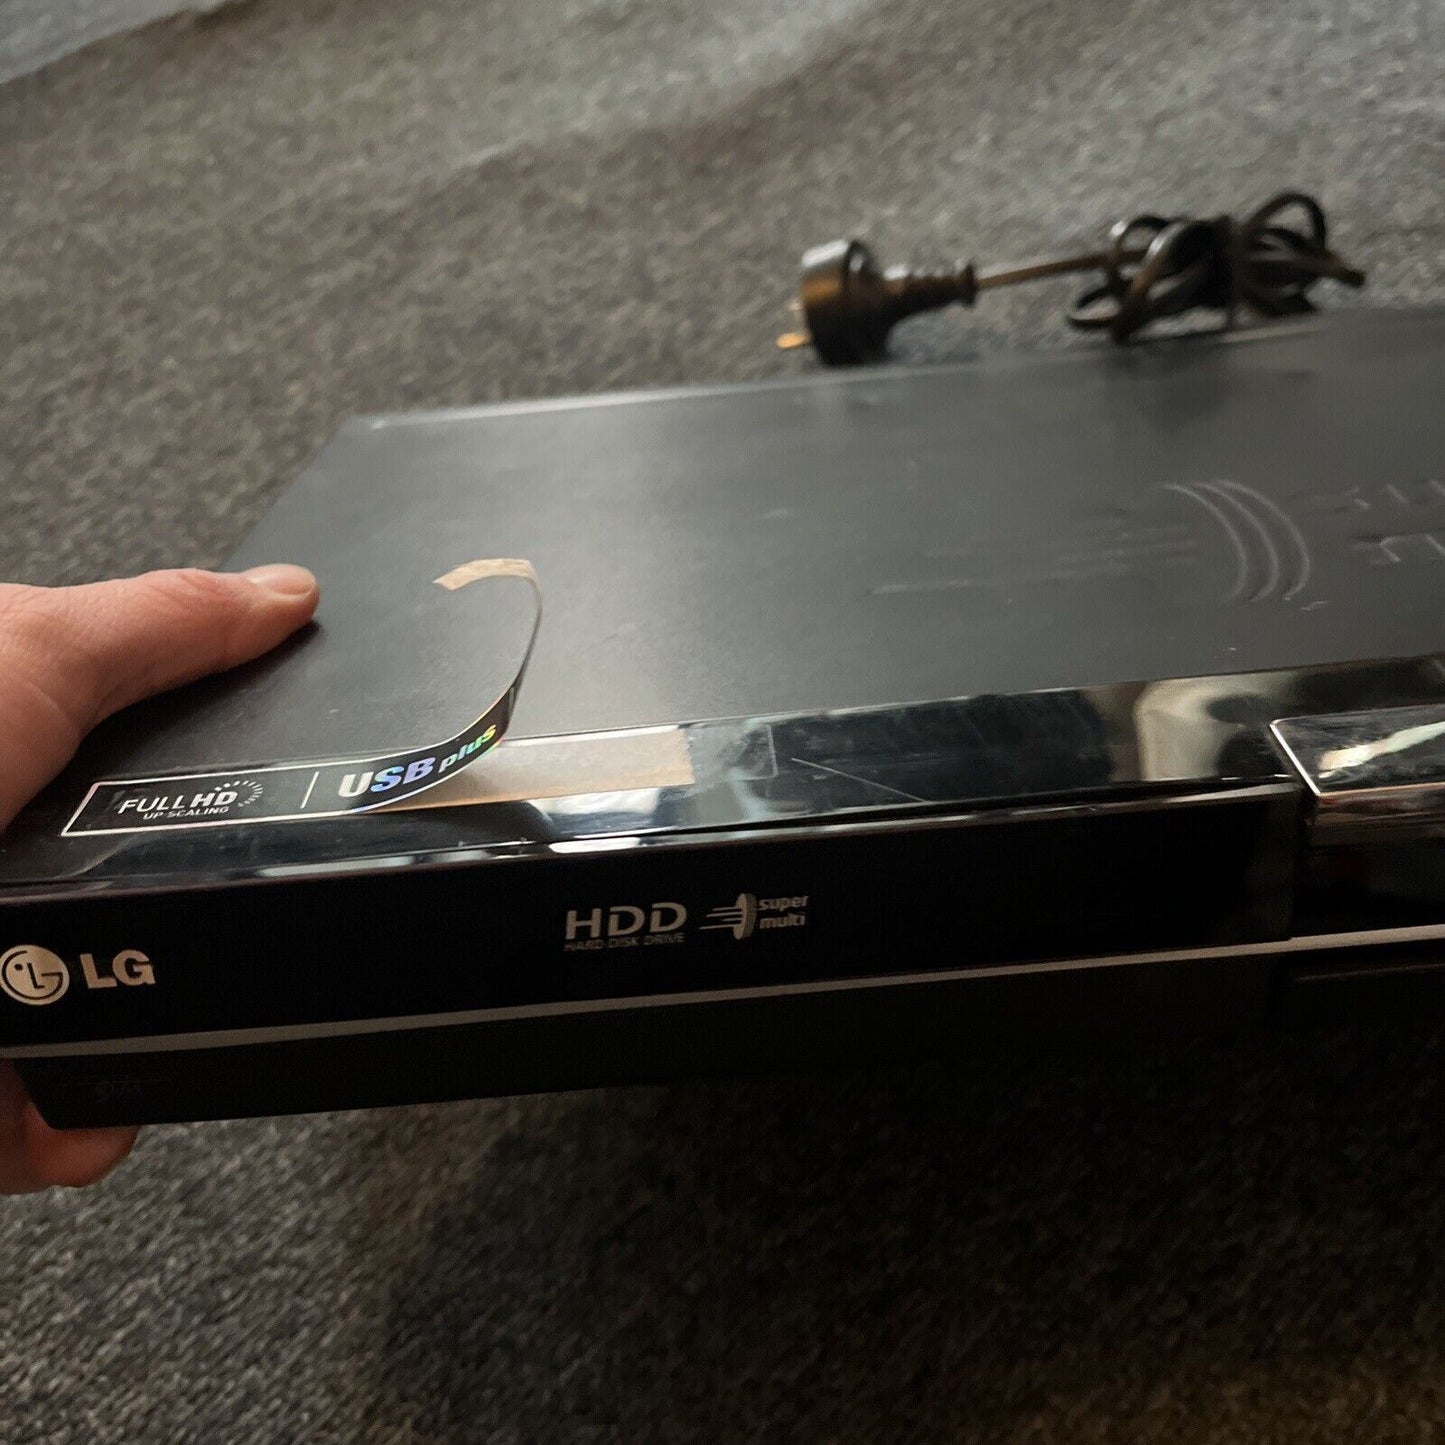 LG DVB-T DVD/HDD Recorder with Multi Format Recording RH397D 160GB *No Remote